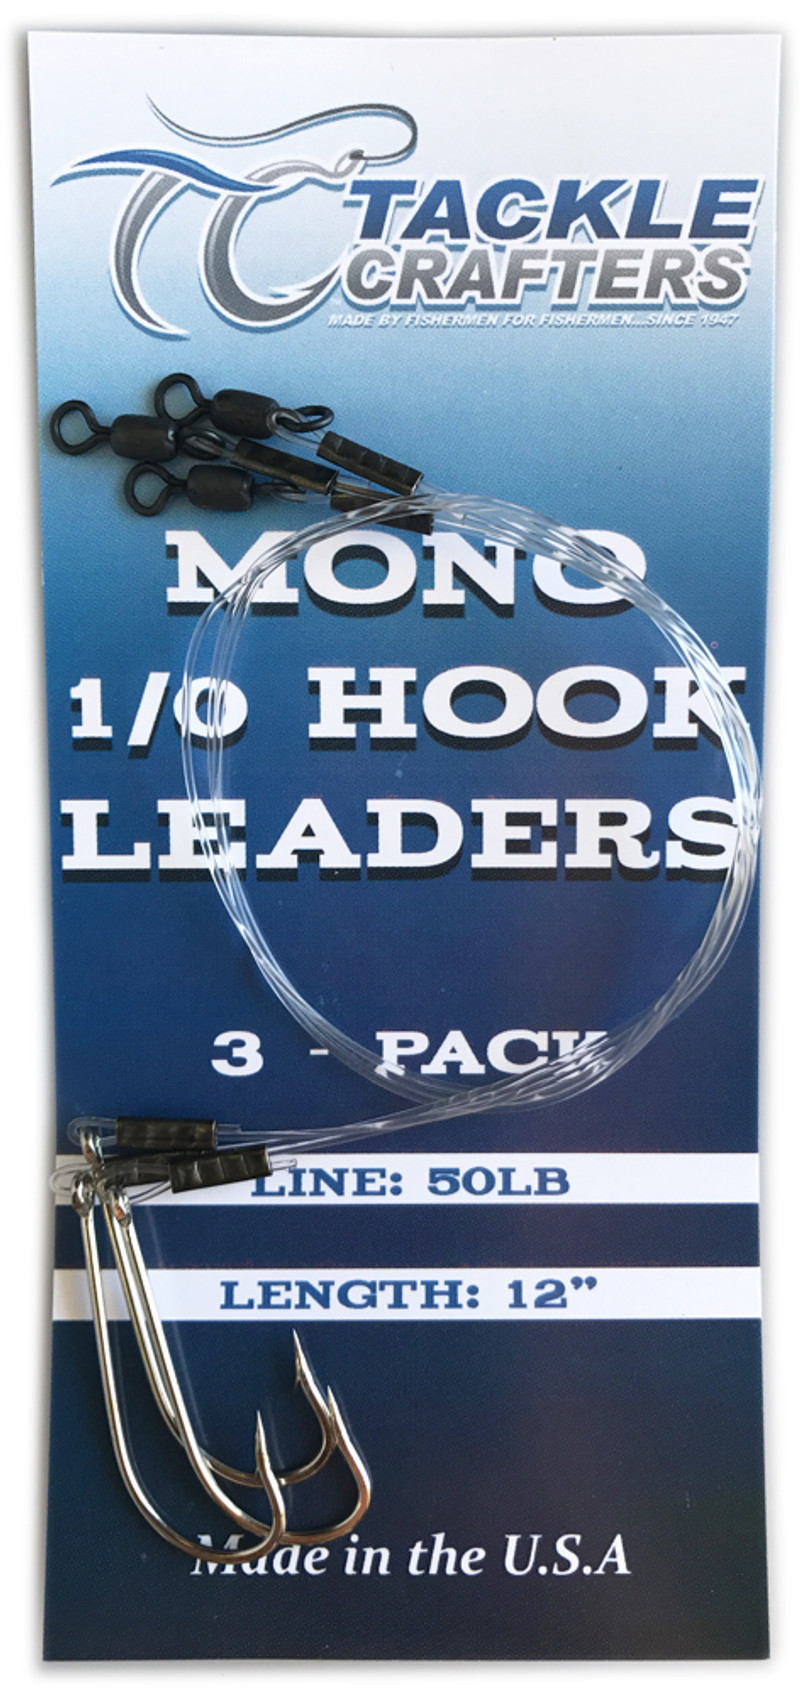 Tackle Crafters Mono J-Hook Leader 2/0 - 3 pack - TackleDirect